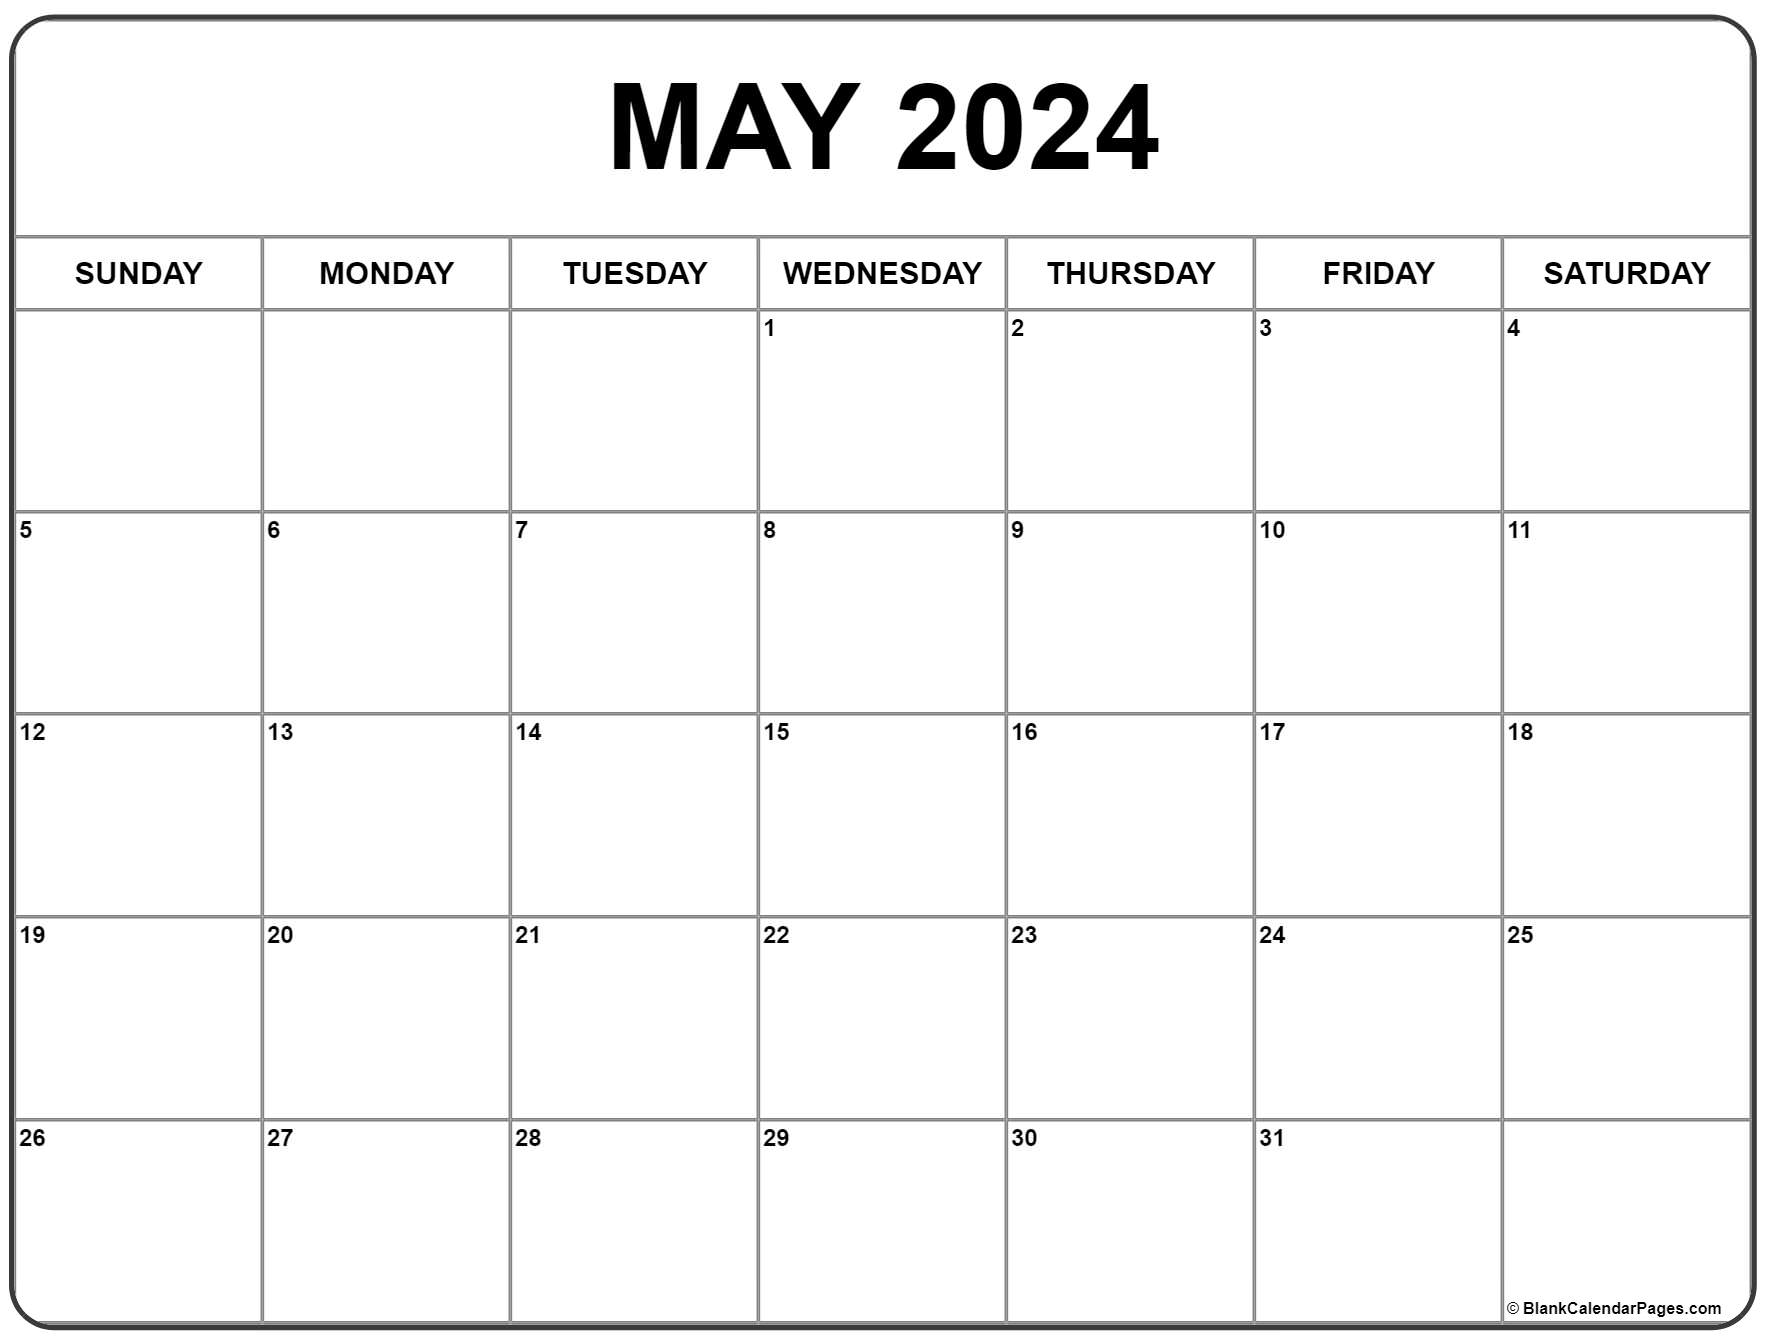 May 2024 Calendar | Free Printable Calendar for Monthly Calendar May 2024 Printable